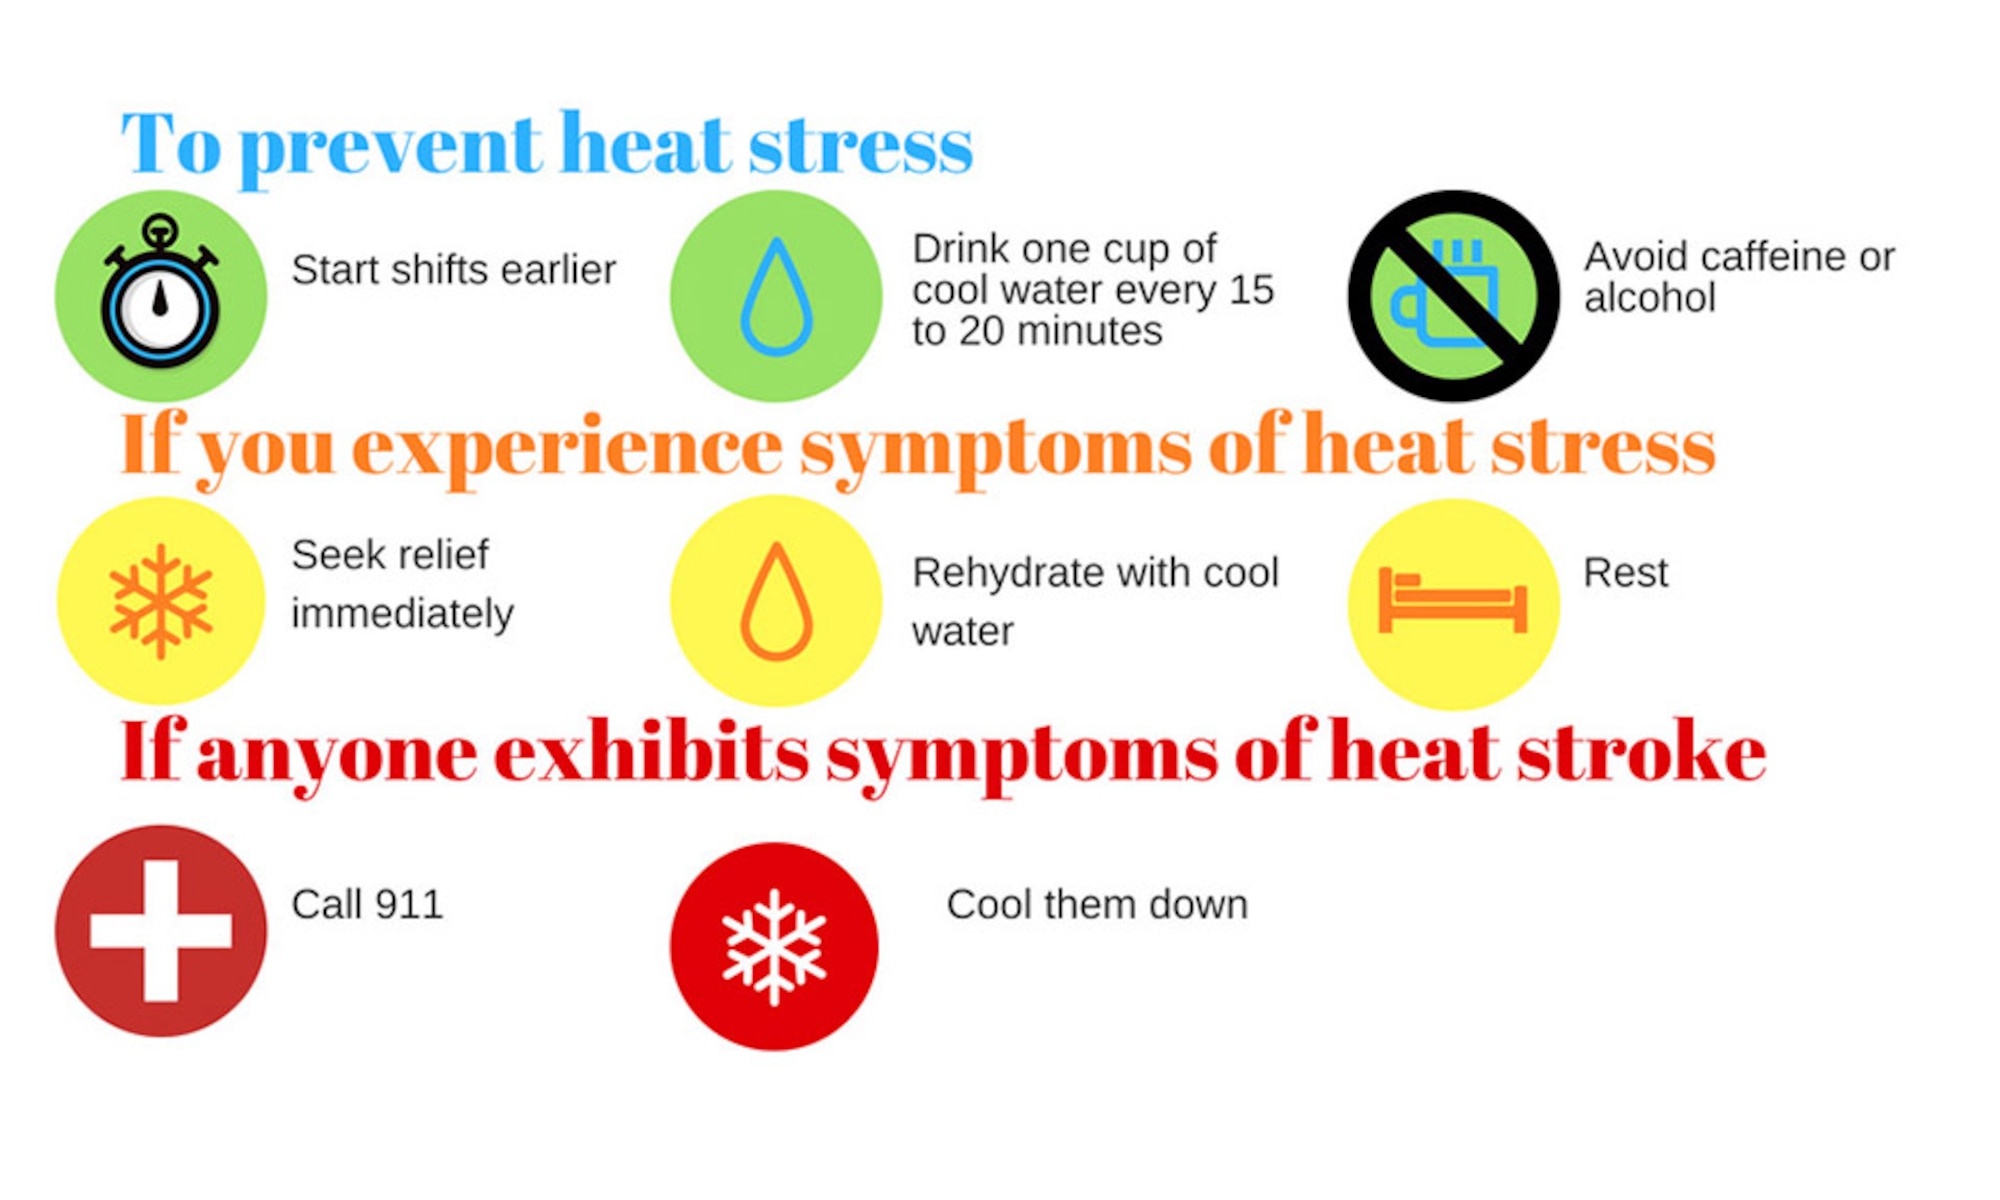 Managing Heat Stress